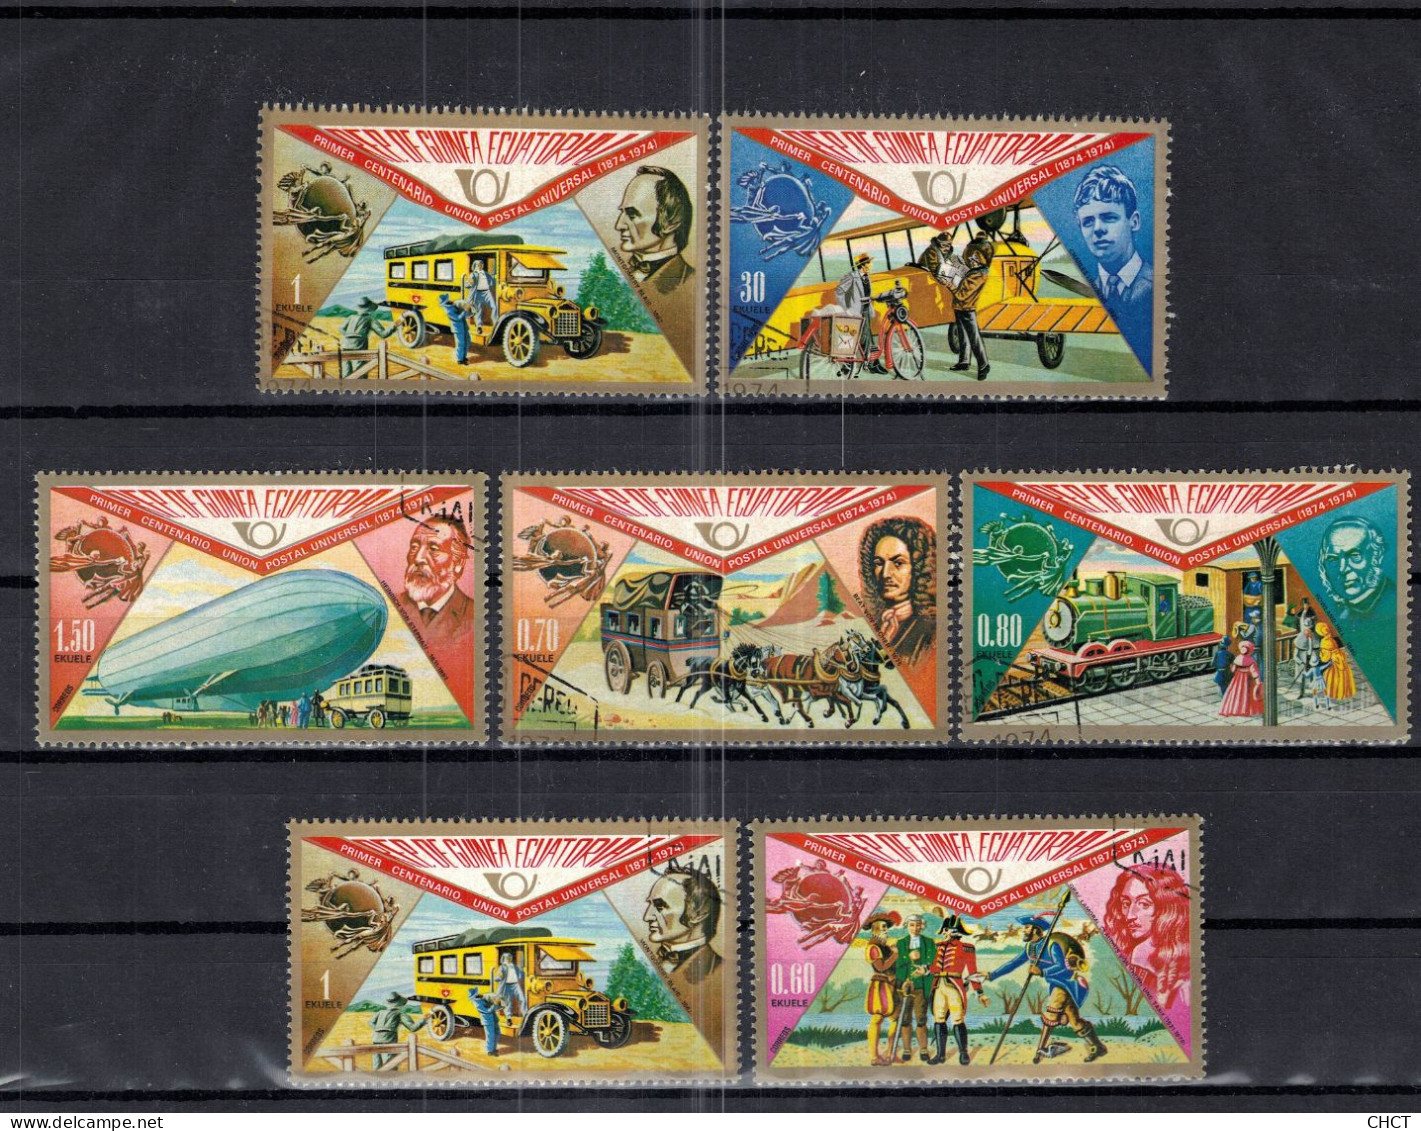 CHCT80 - First UPU Centenary, Postal History, Zeppelin, Train, Used, Complete Series, 1972, Equatorial Guinea - Equatorial Guinea